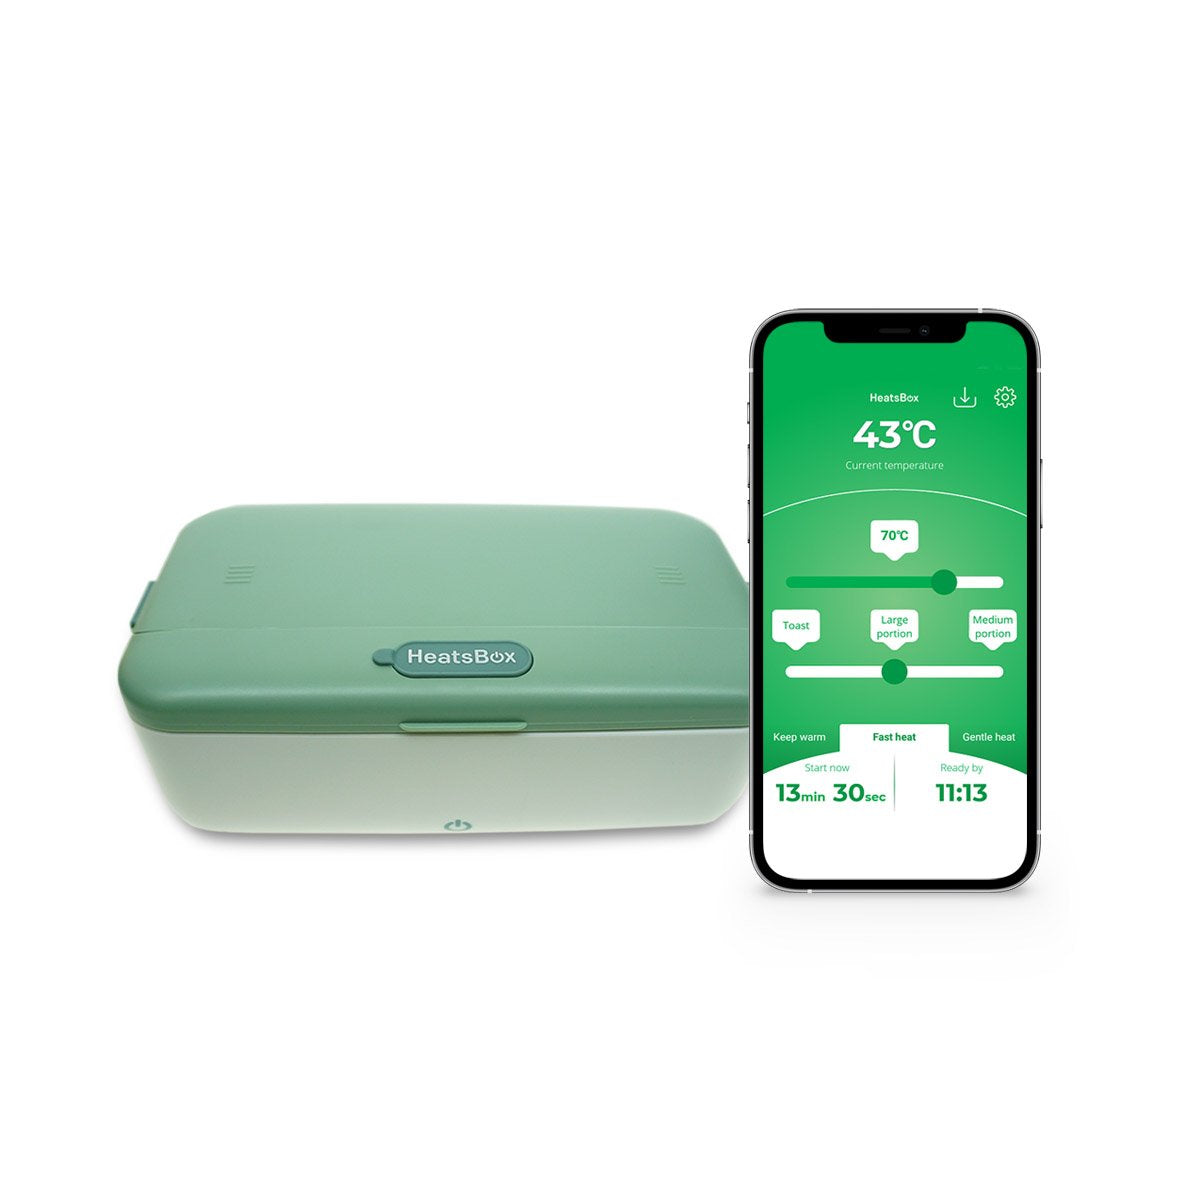 Inspire Ecoware Heatsbox, Smartphone Controlled Self Heating Hot